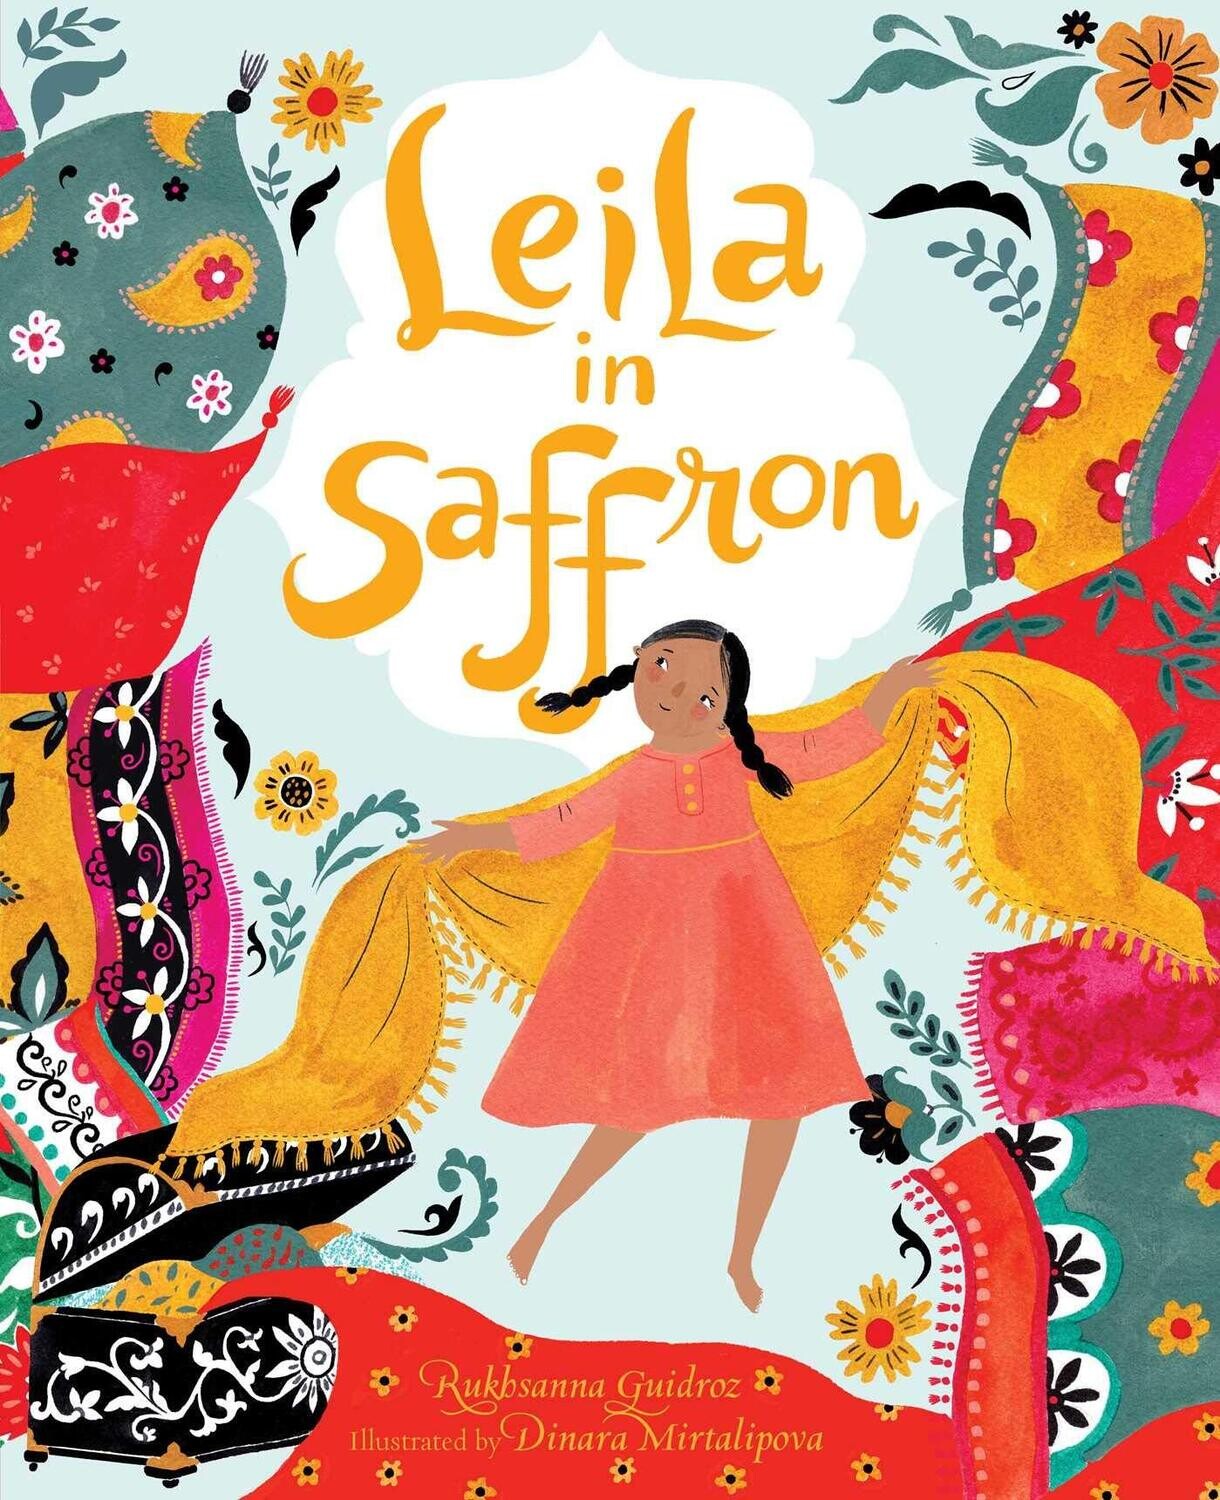 Leila in Saffron by Rukhsanna Guidroz, Illustrated by Dinara Mirtalipova